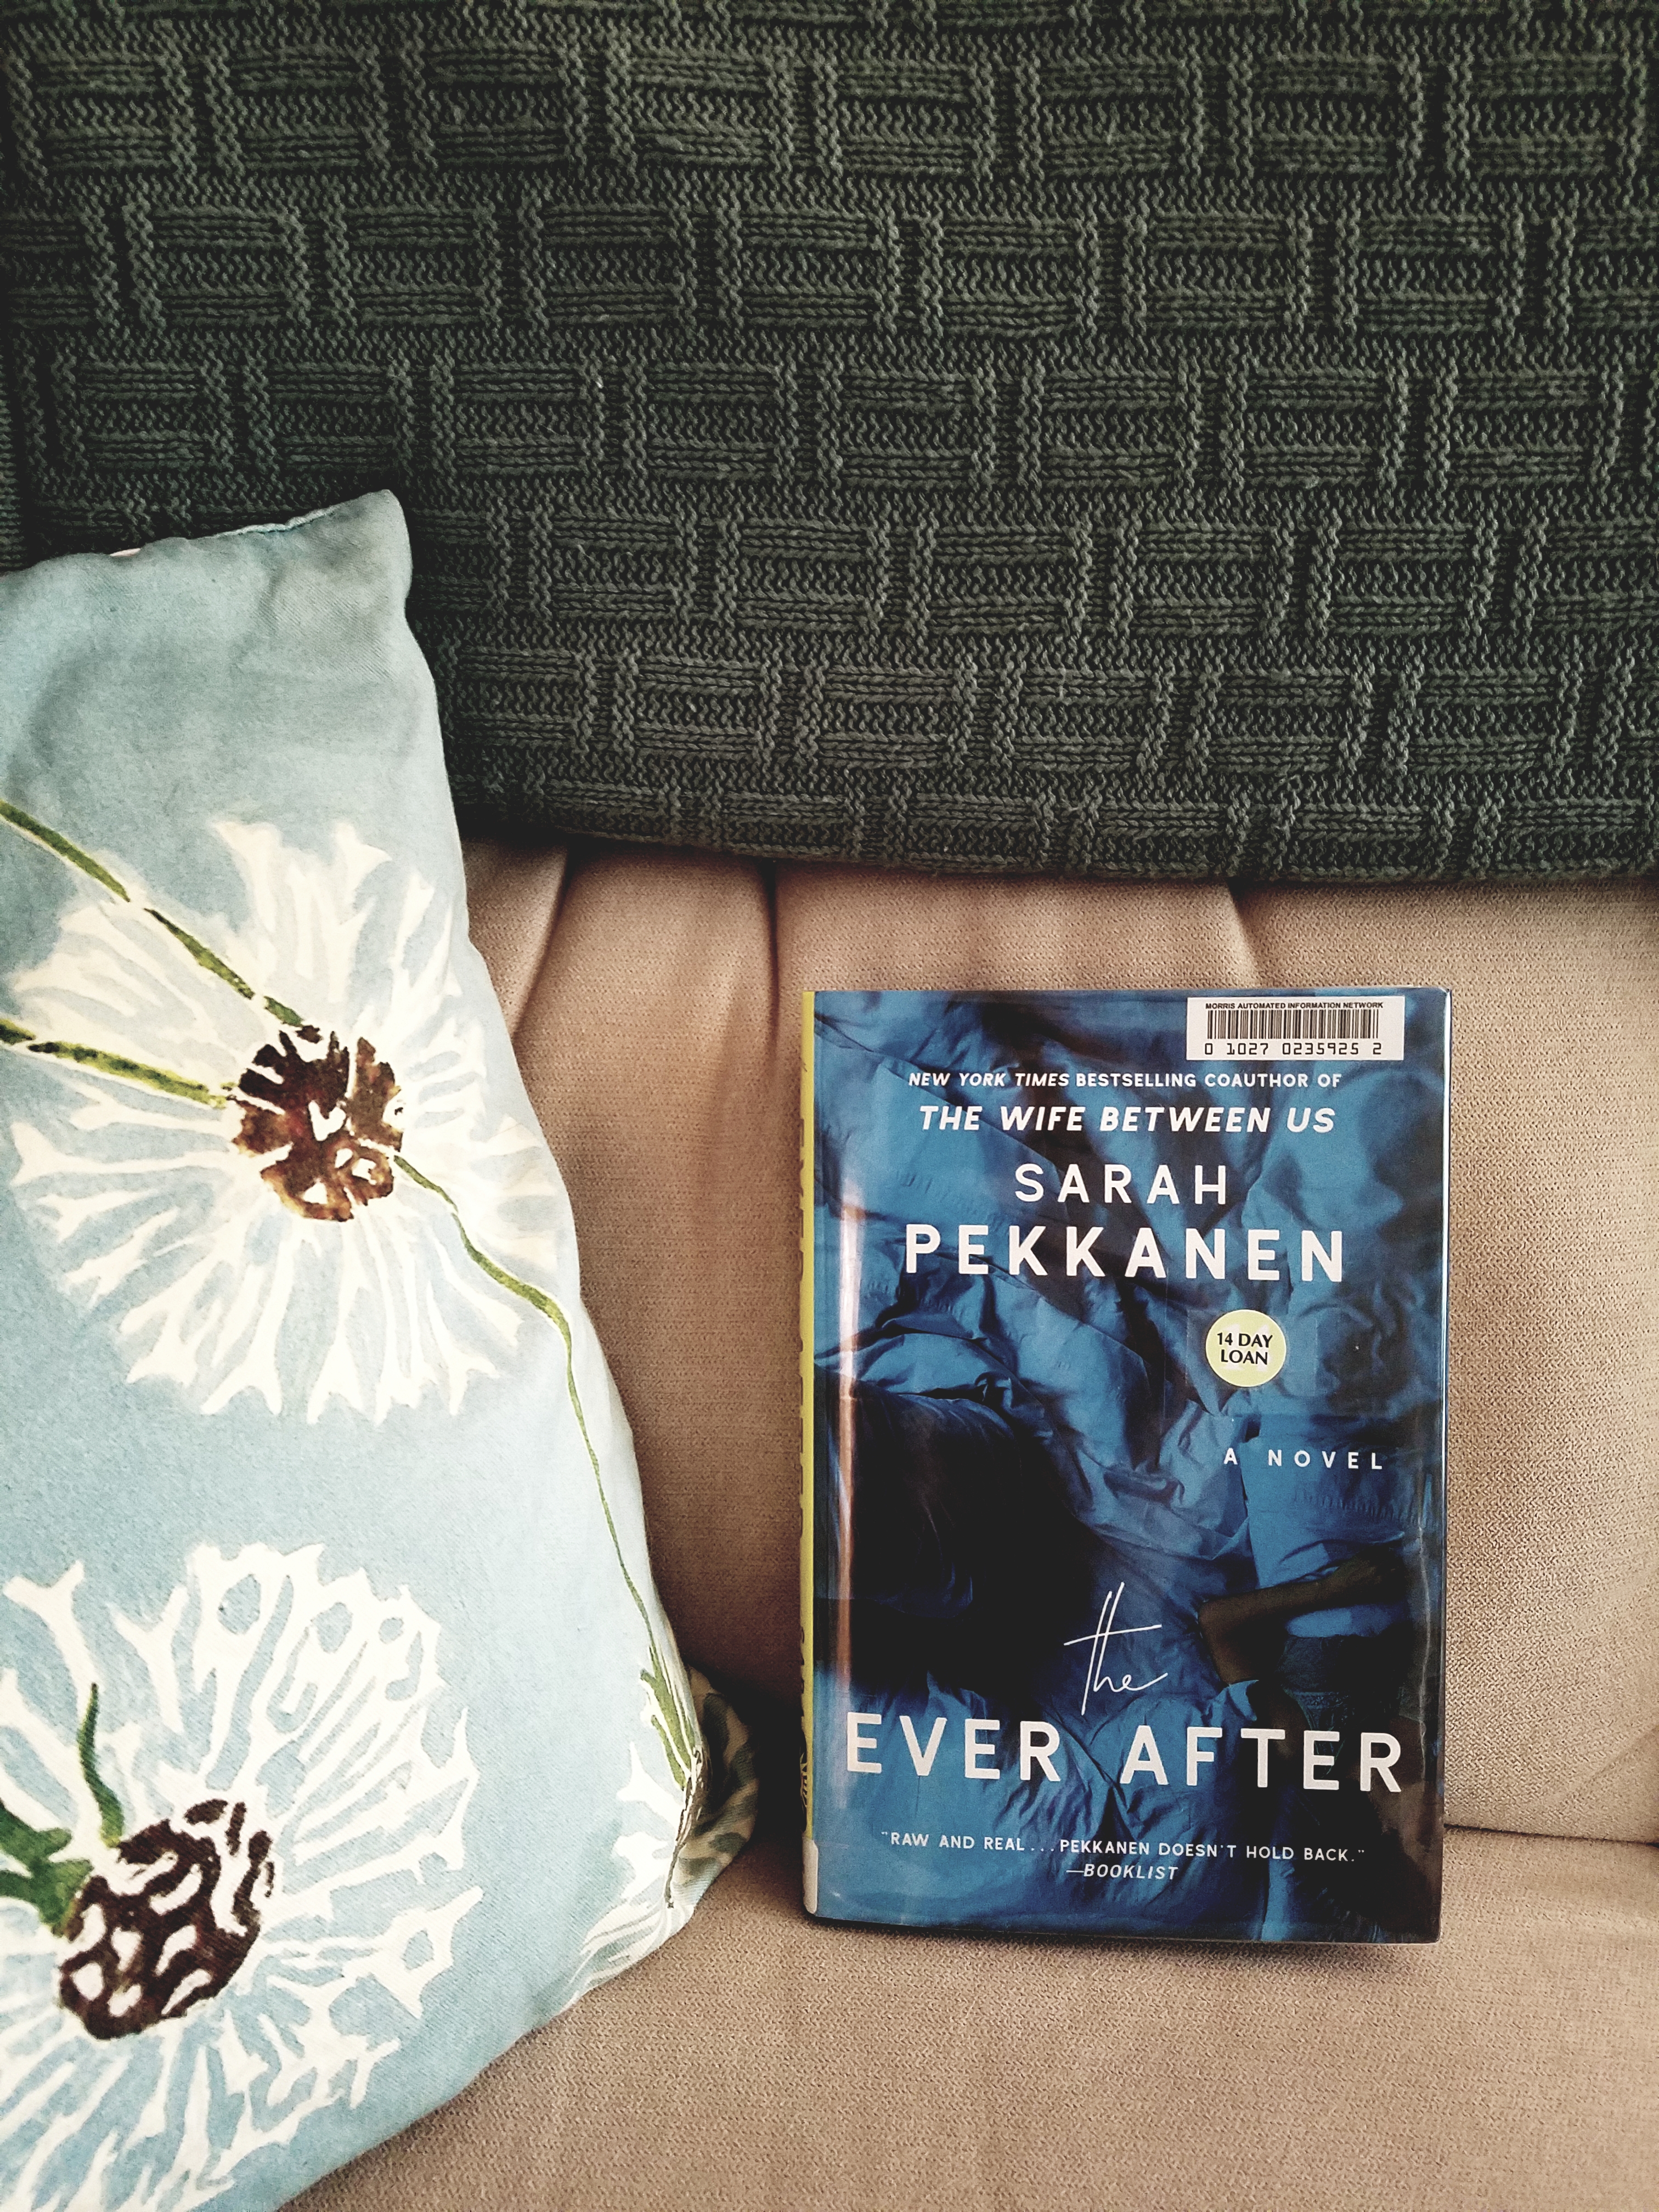 THE EVER AFTER by Sarah Pekkanen